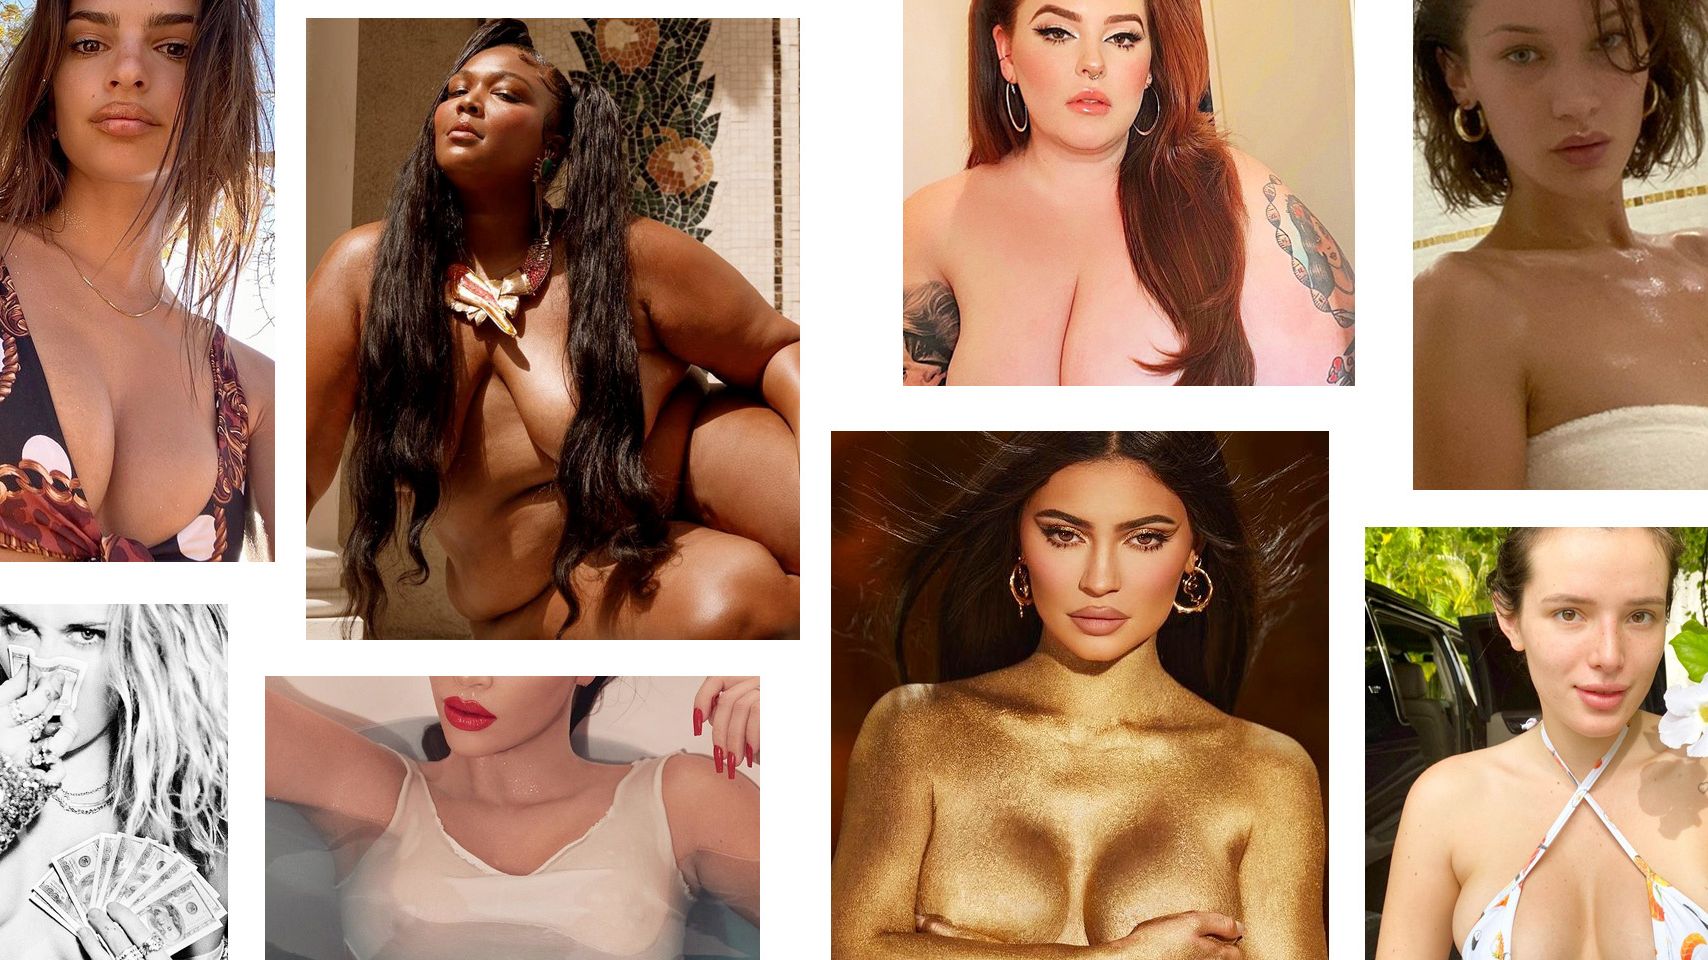 darren spackman add girls who show their boobs photo